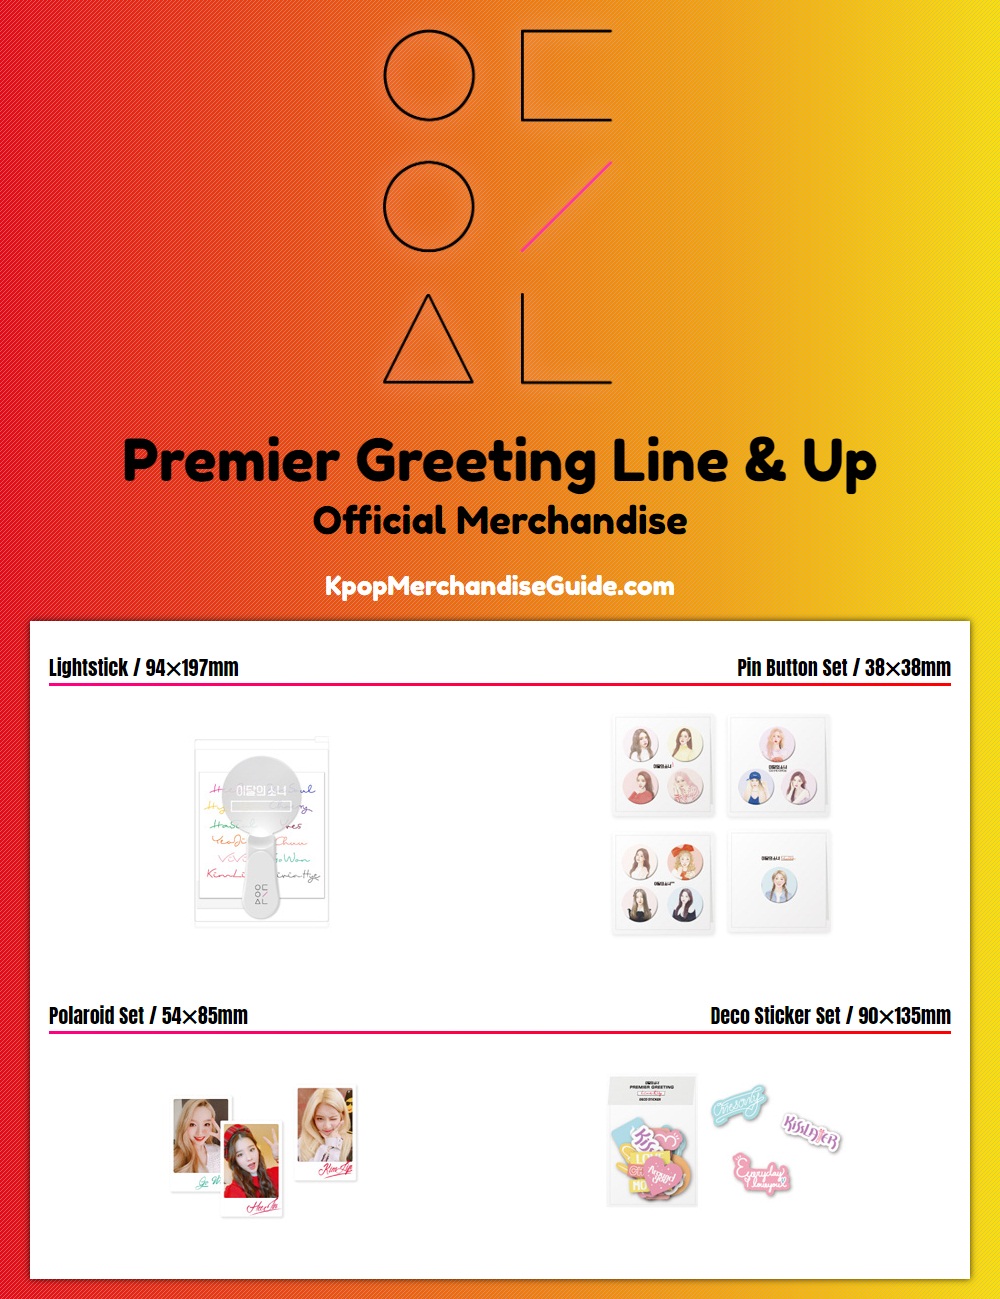 Loona Premier Greeting Line & Up Merchandise